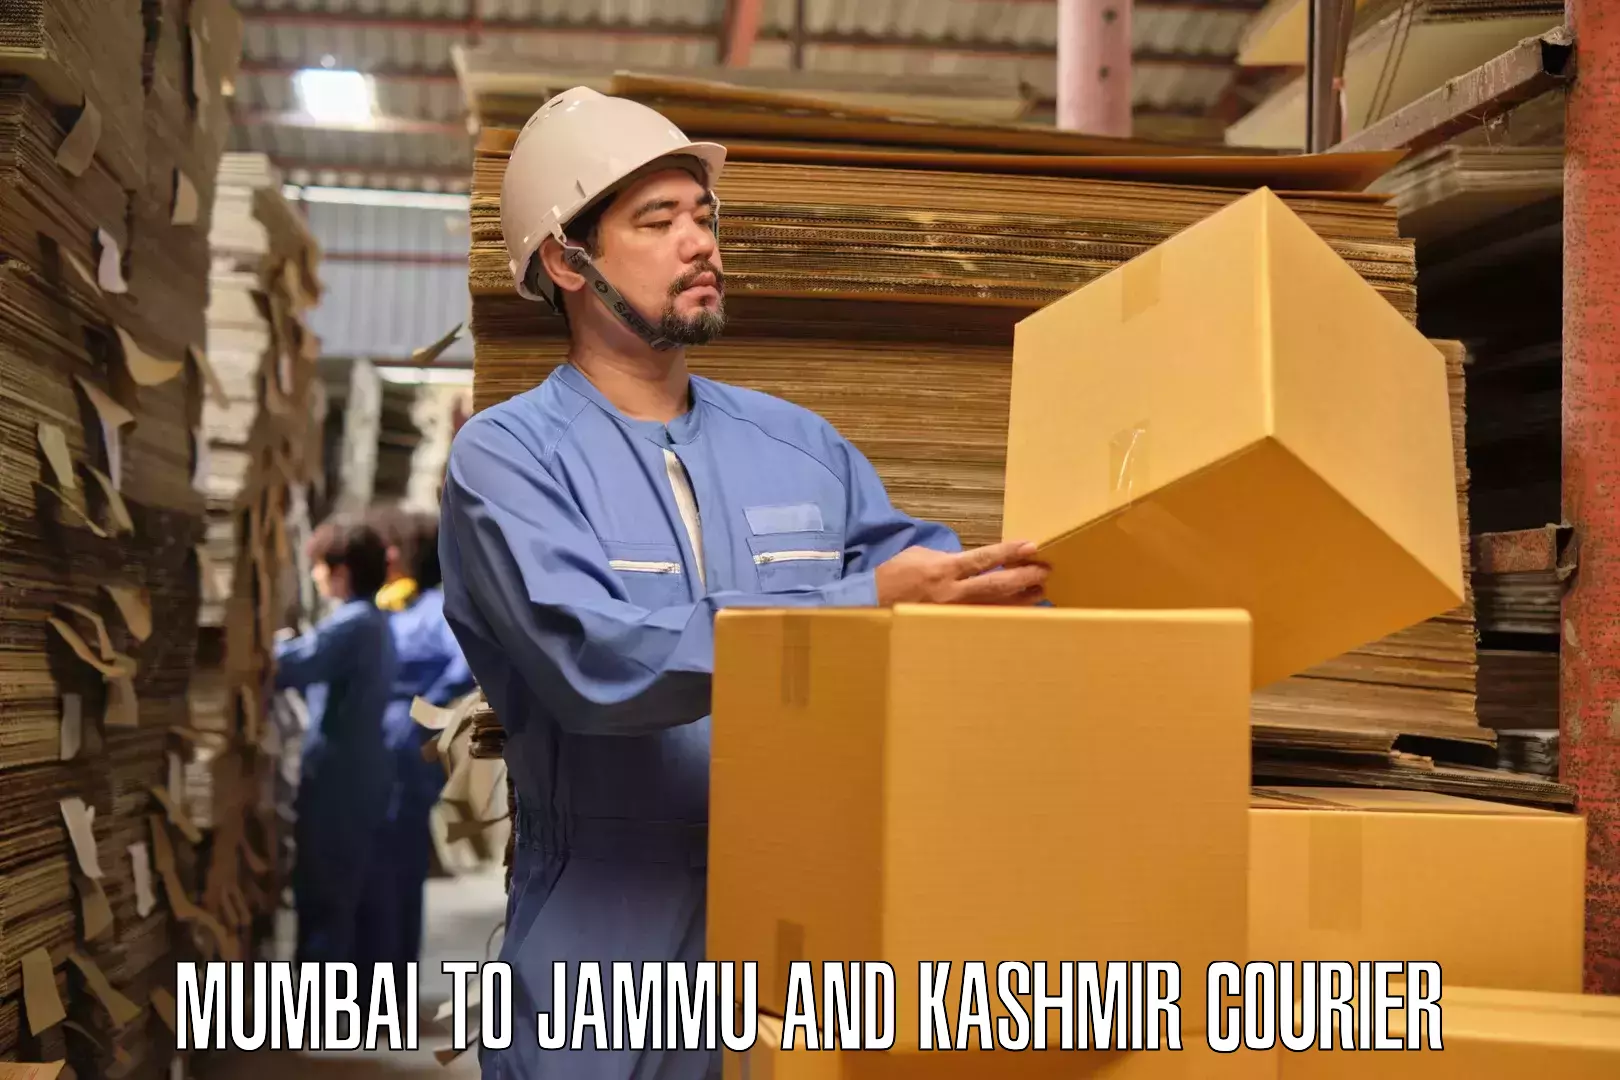 Furniture delivery service Mumbai to Kishtwar